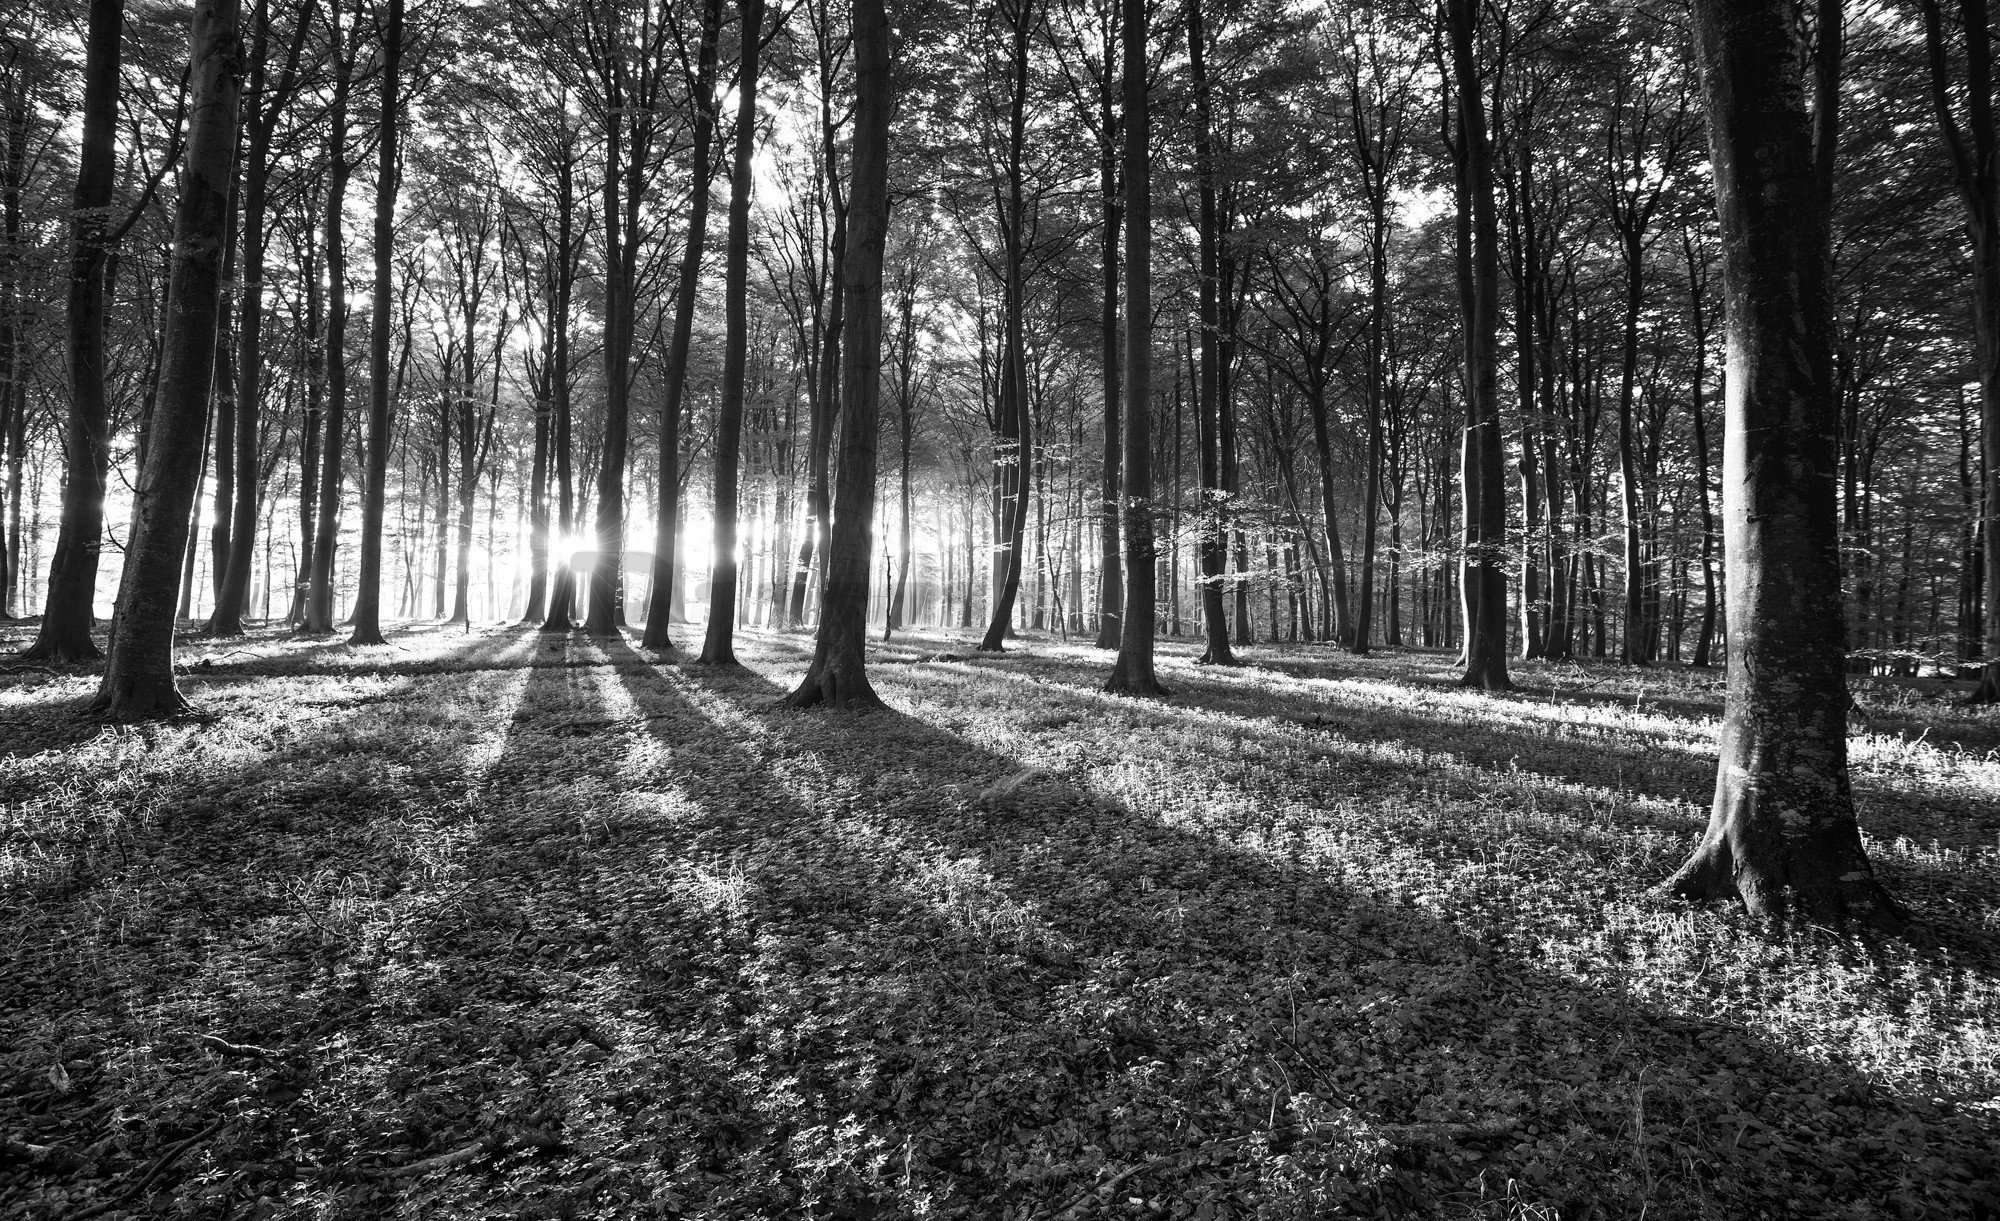 Vlies foto tapeta: Crno-bijela šuma (1) - 416x254 cm